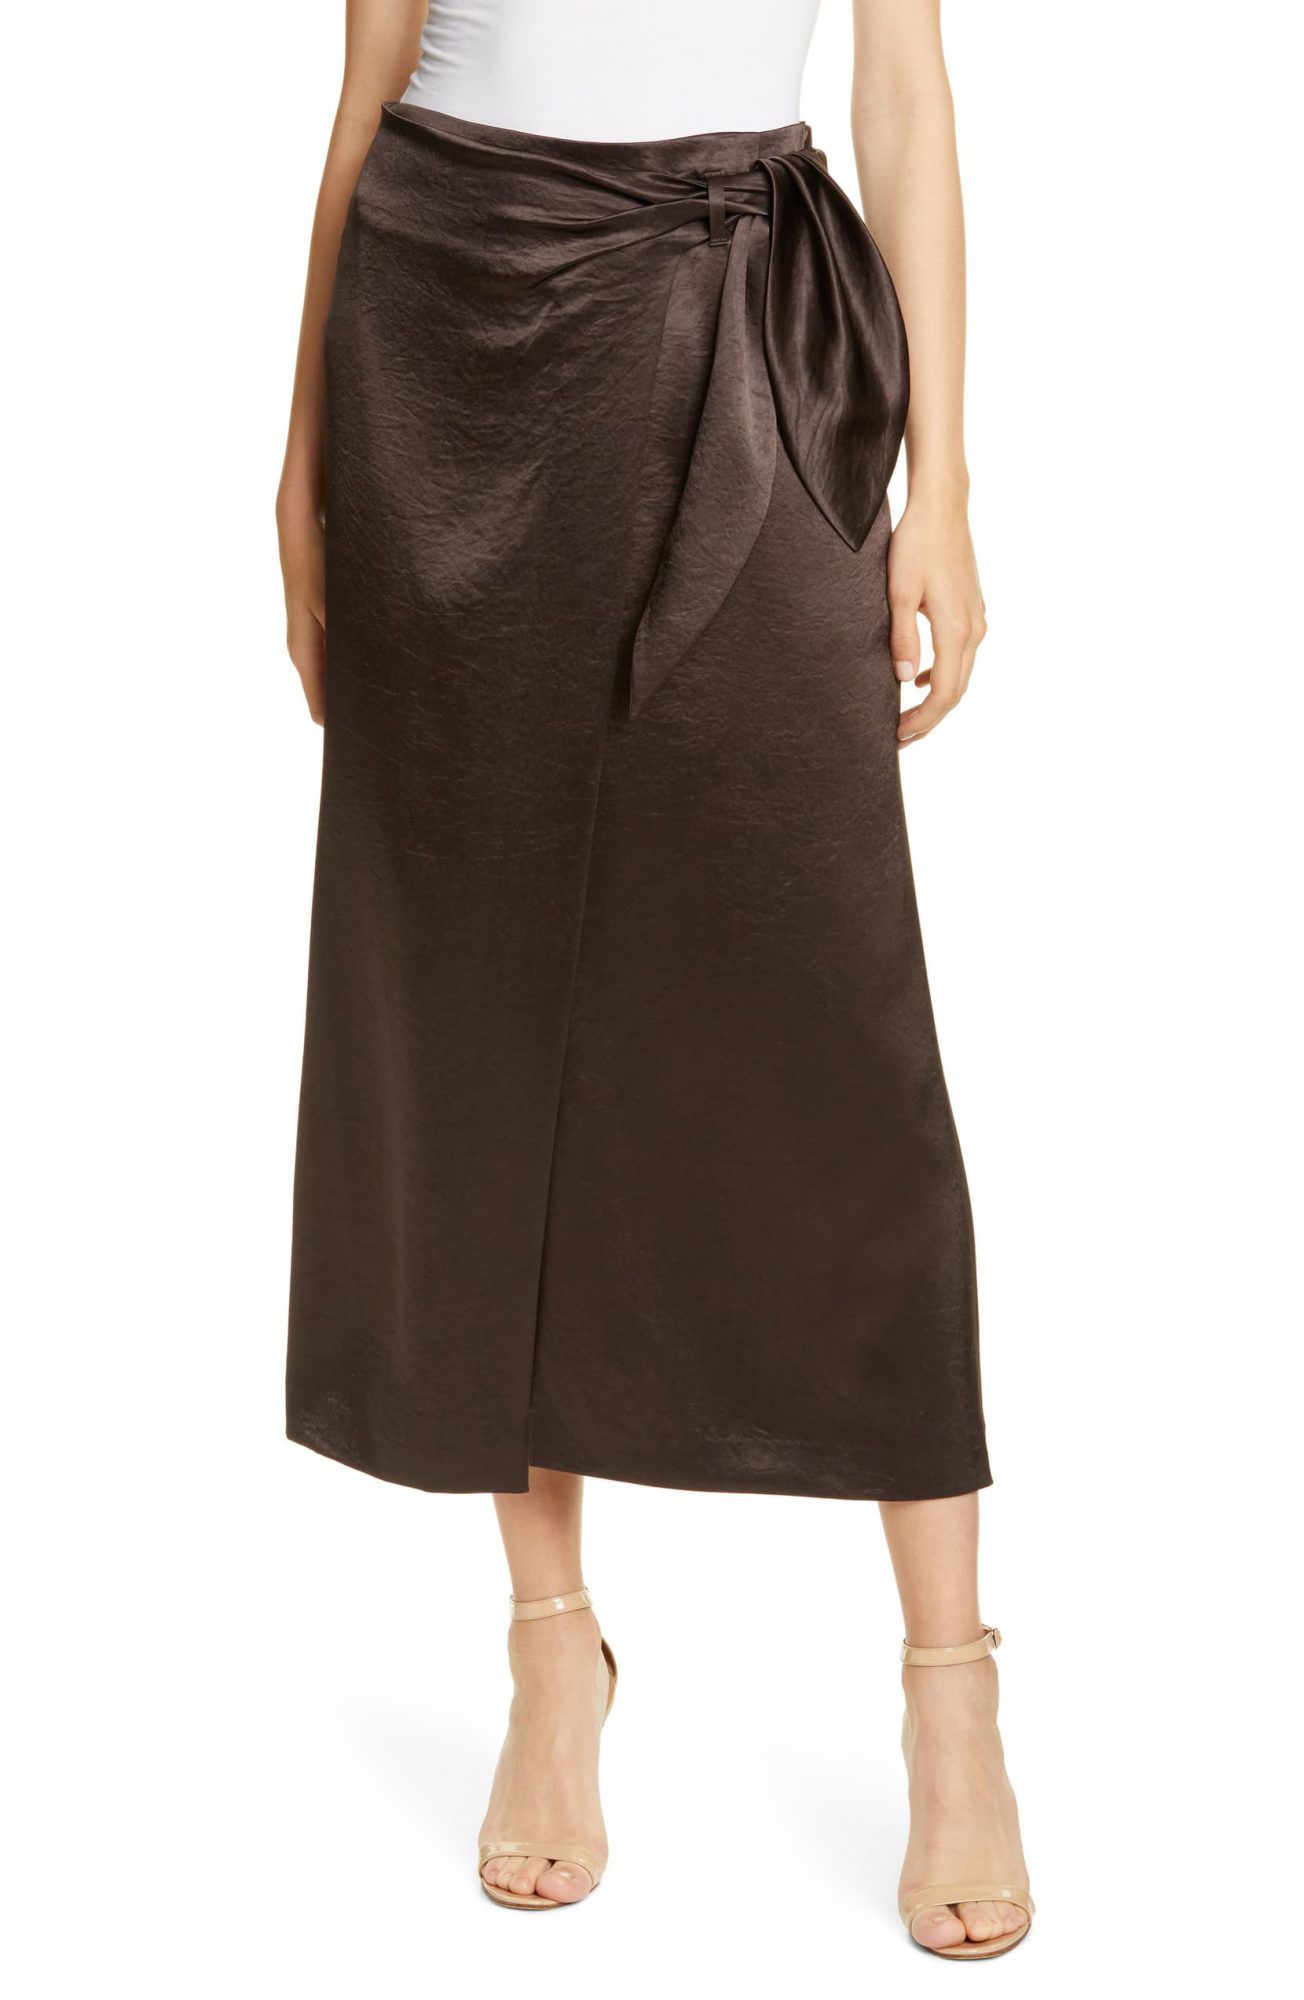 Shop Meghan Markle's Brown Satin Midi Skirt Look Starting at $23 ...